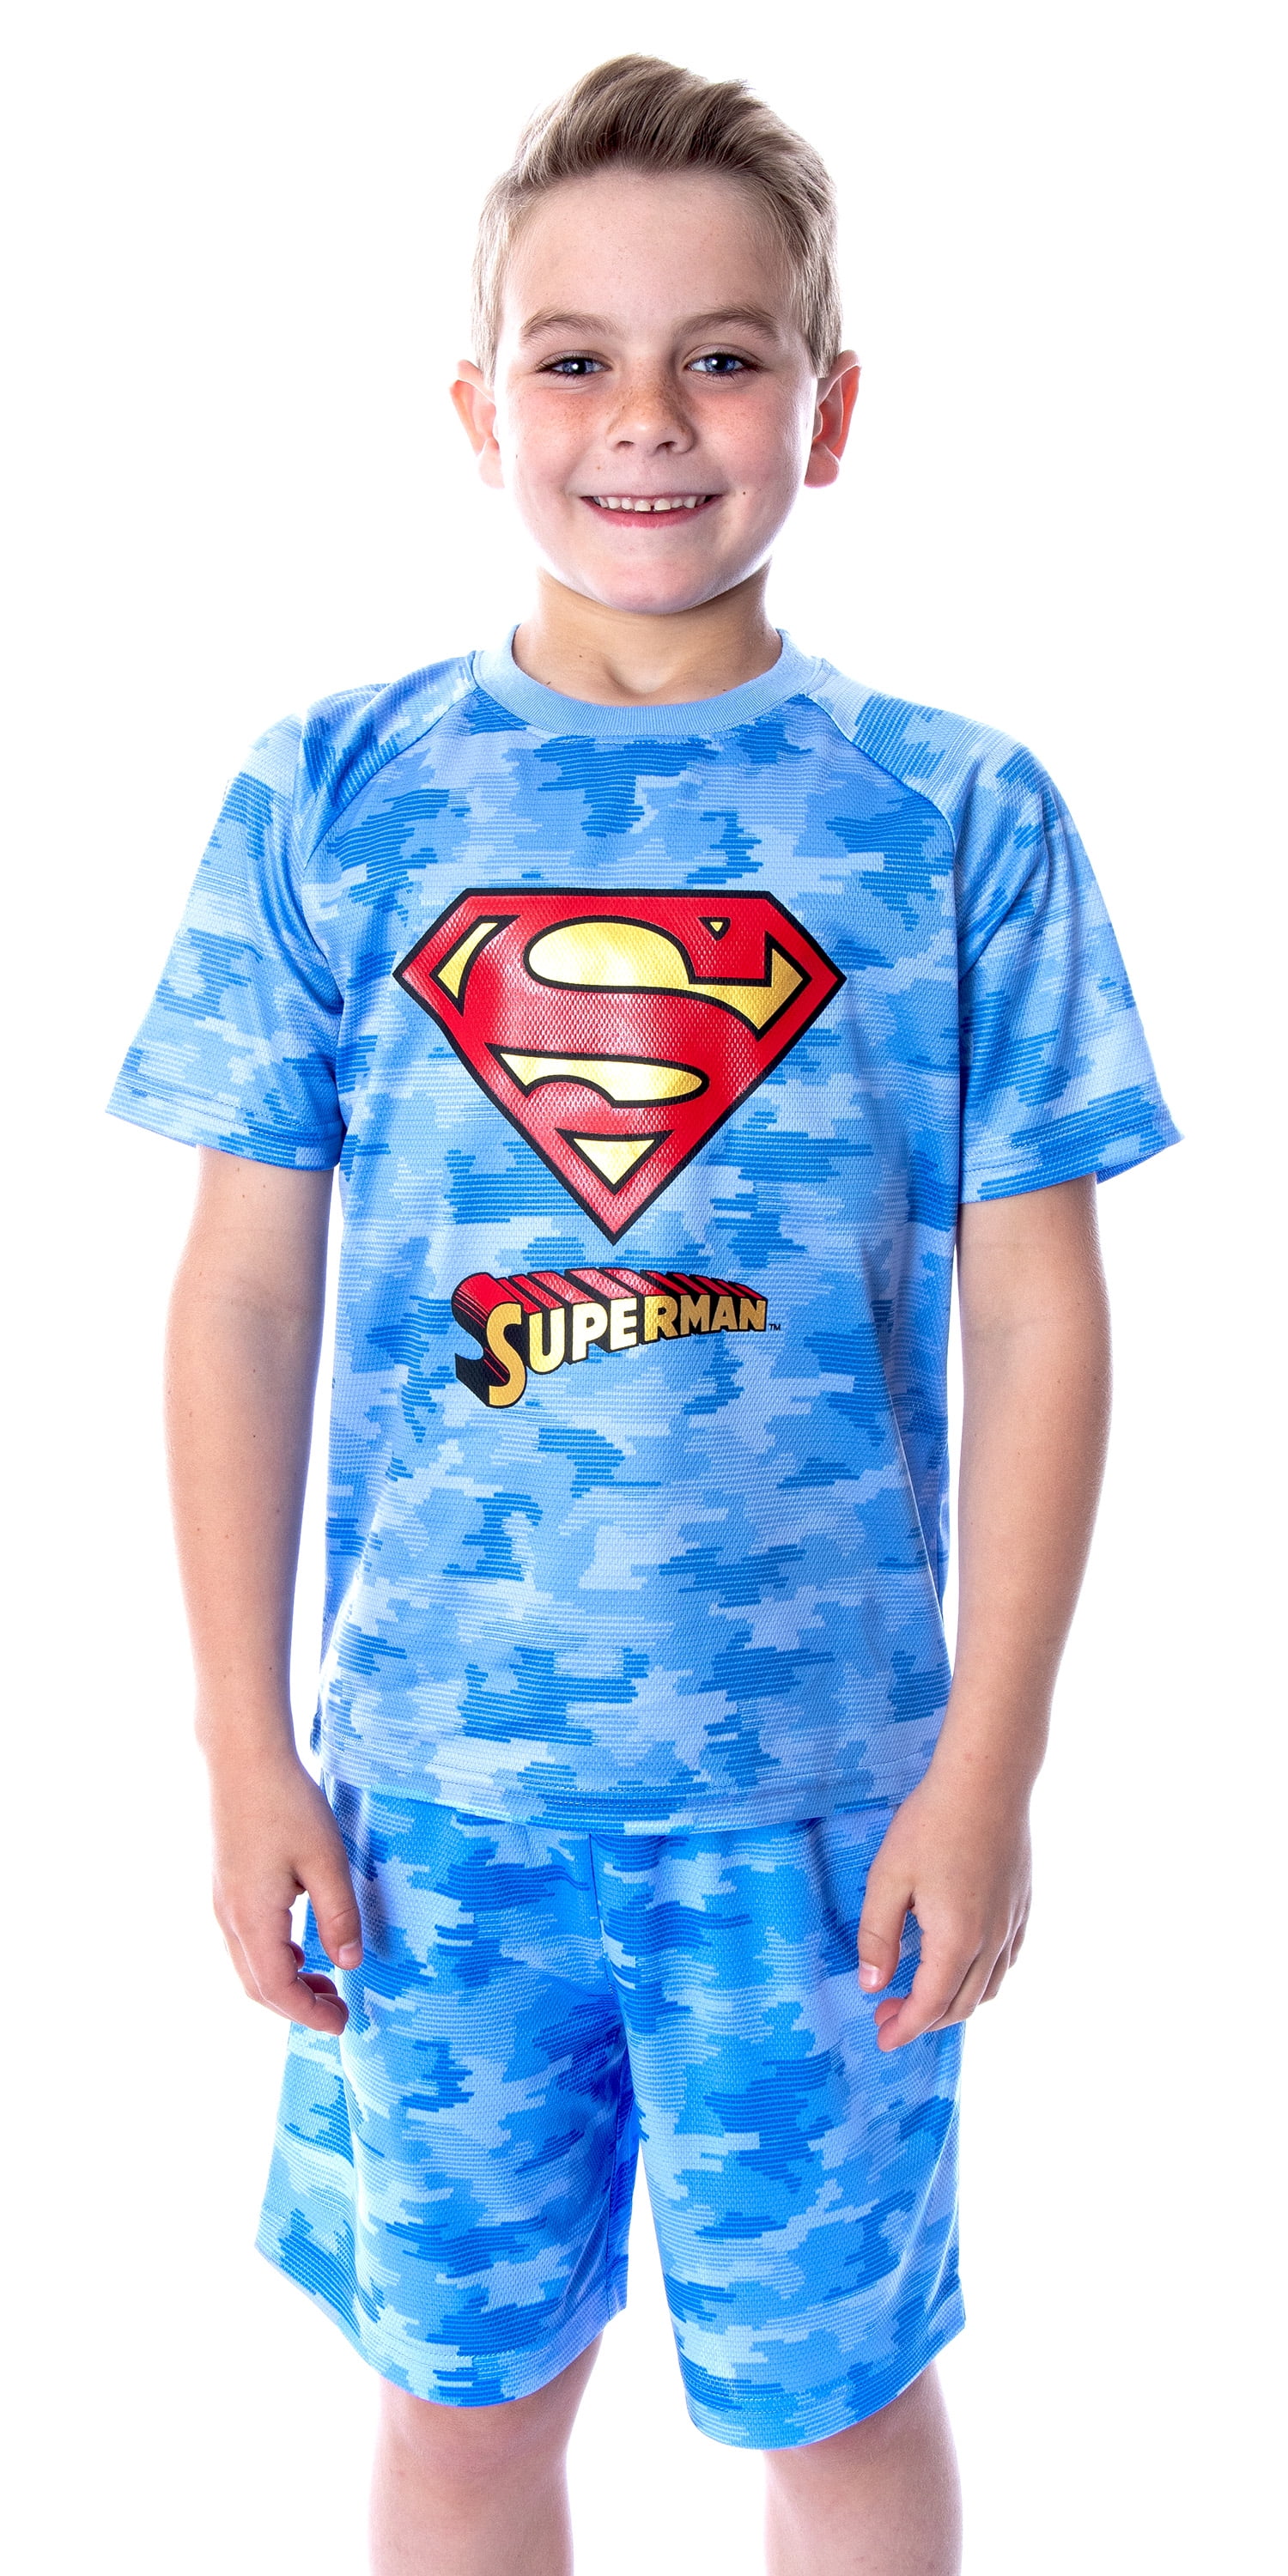 Superman Boys 2-Piece Shorts Set Outfit